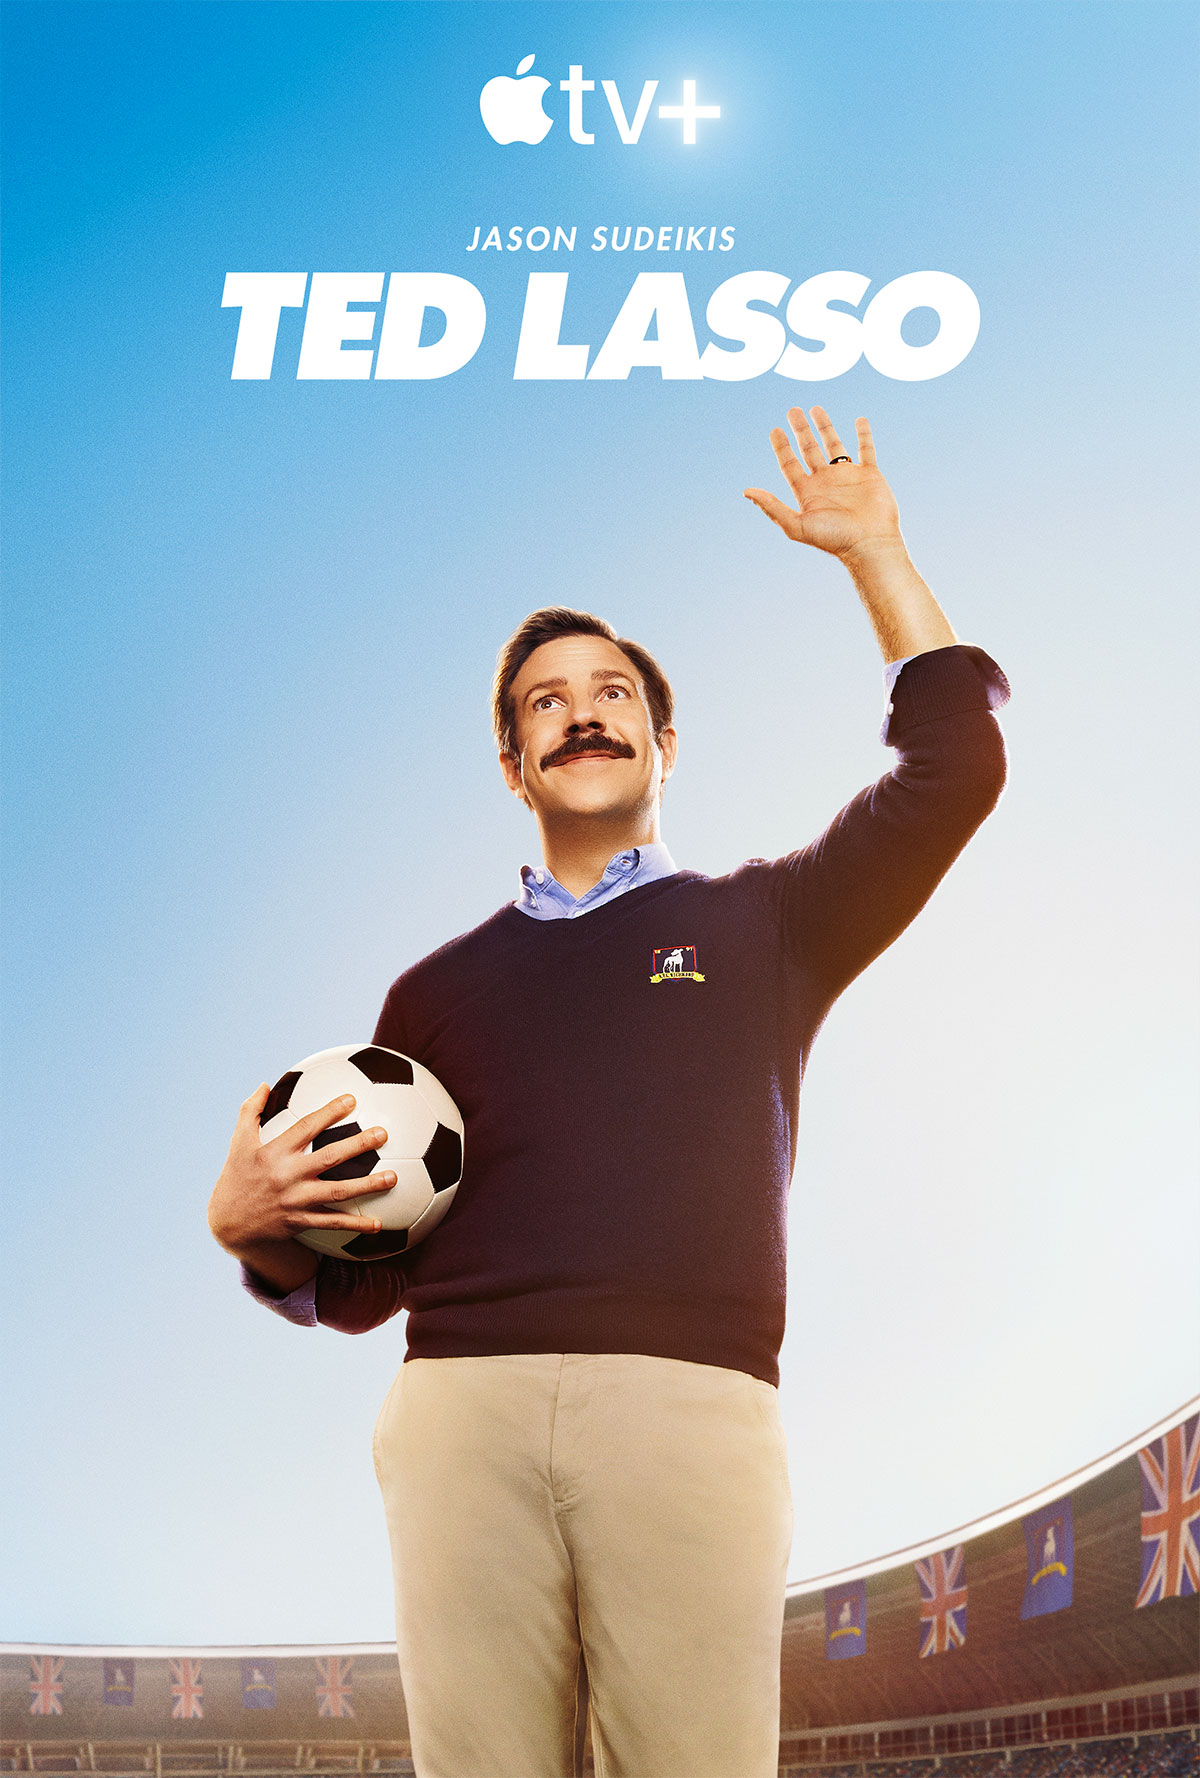 Ver Ted Lasso 2020 Serie Completa Español Latino Full Hd Pelis123 